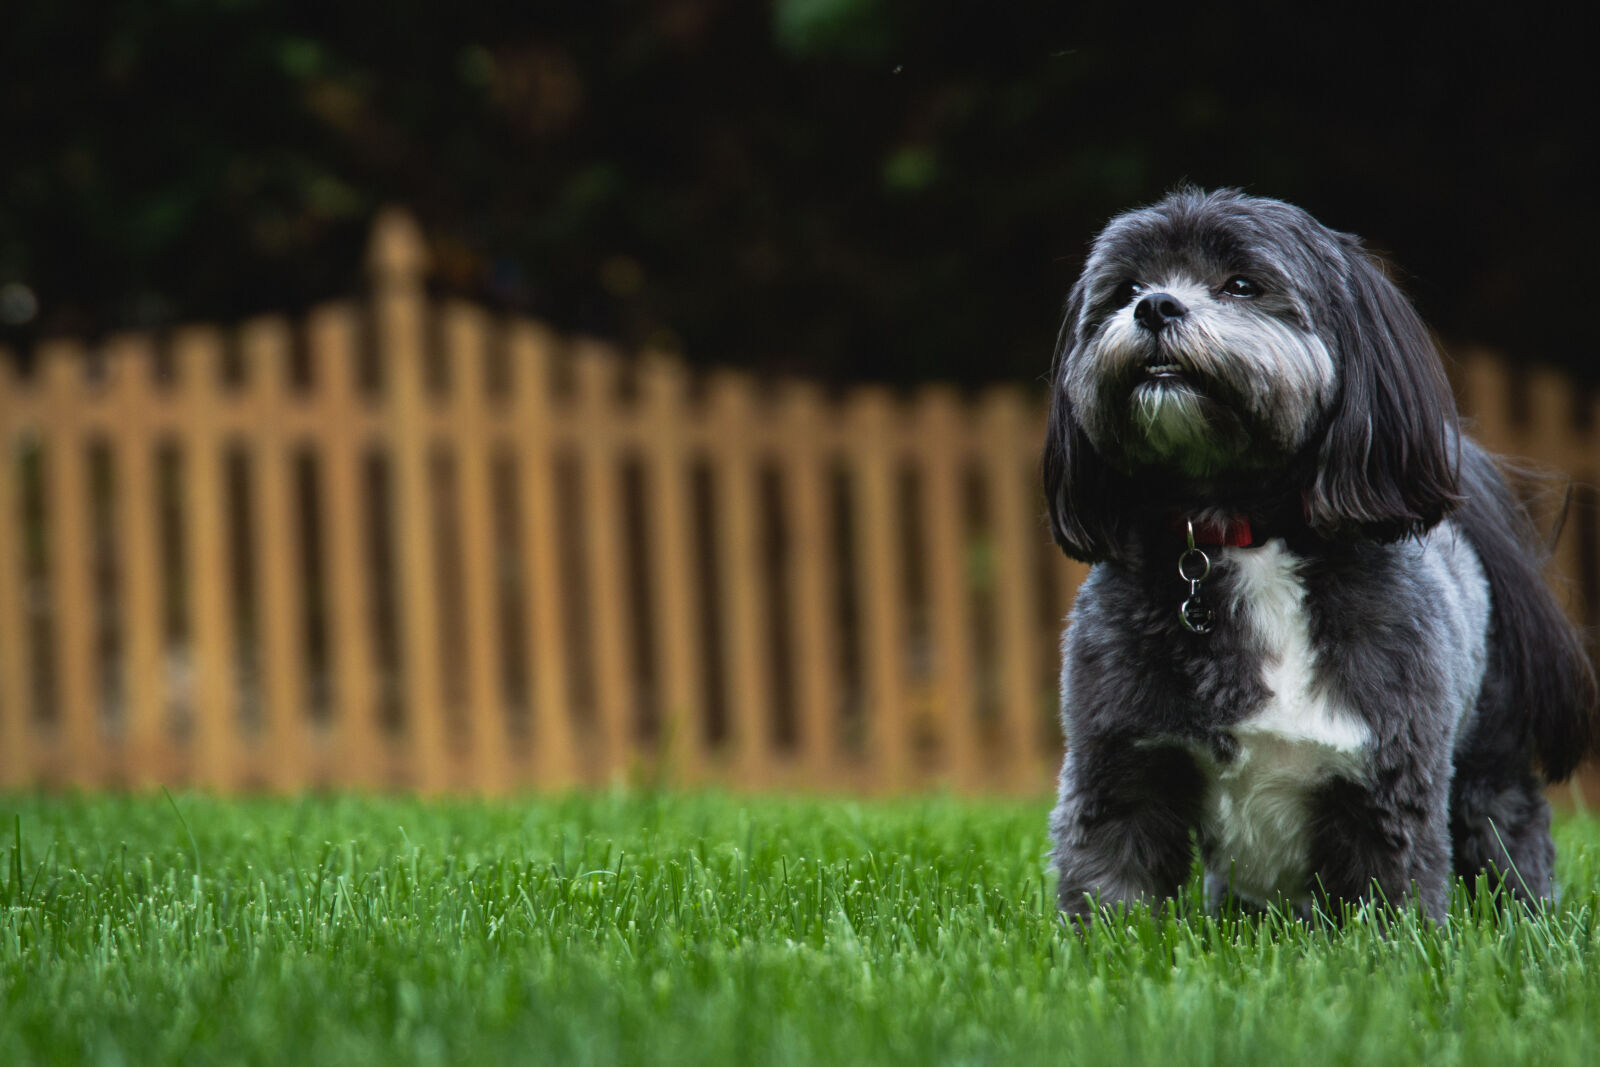 Canon EOS 60D + Sigma 24-105mm f/4 DG OS HSM | A sample photo. Backyard, dog, home photography